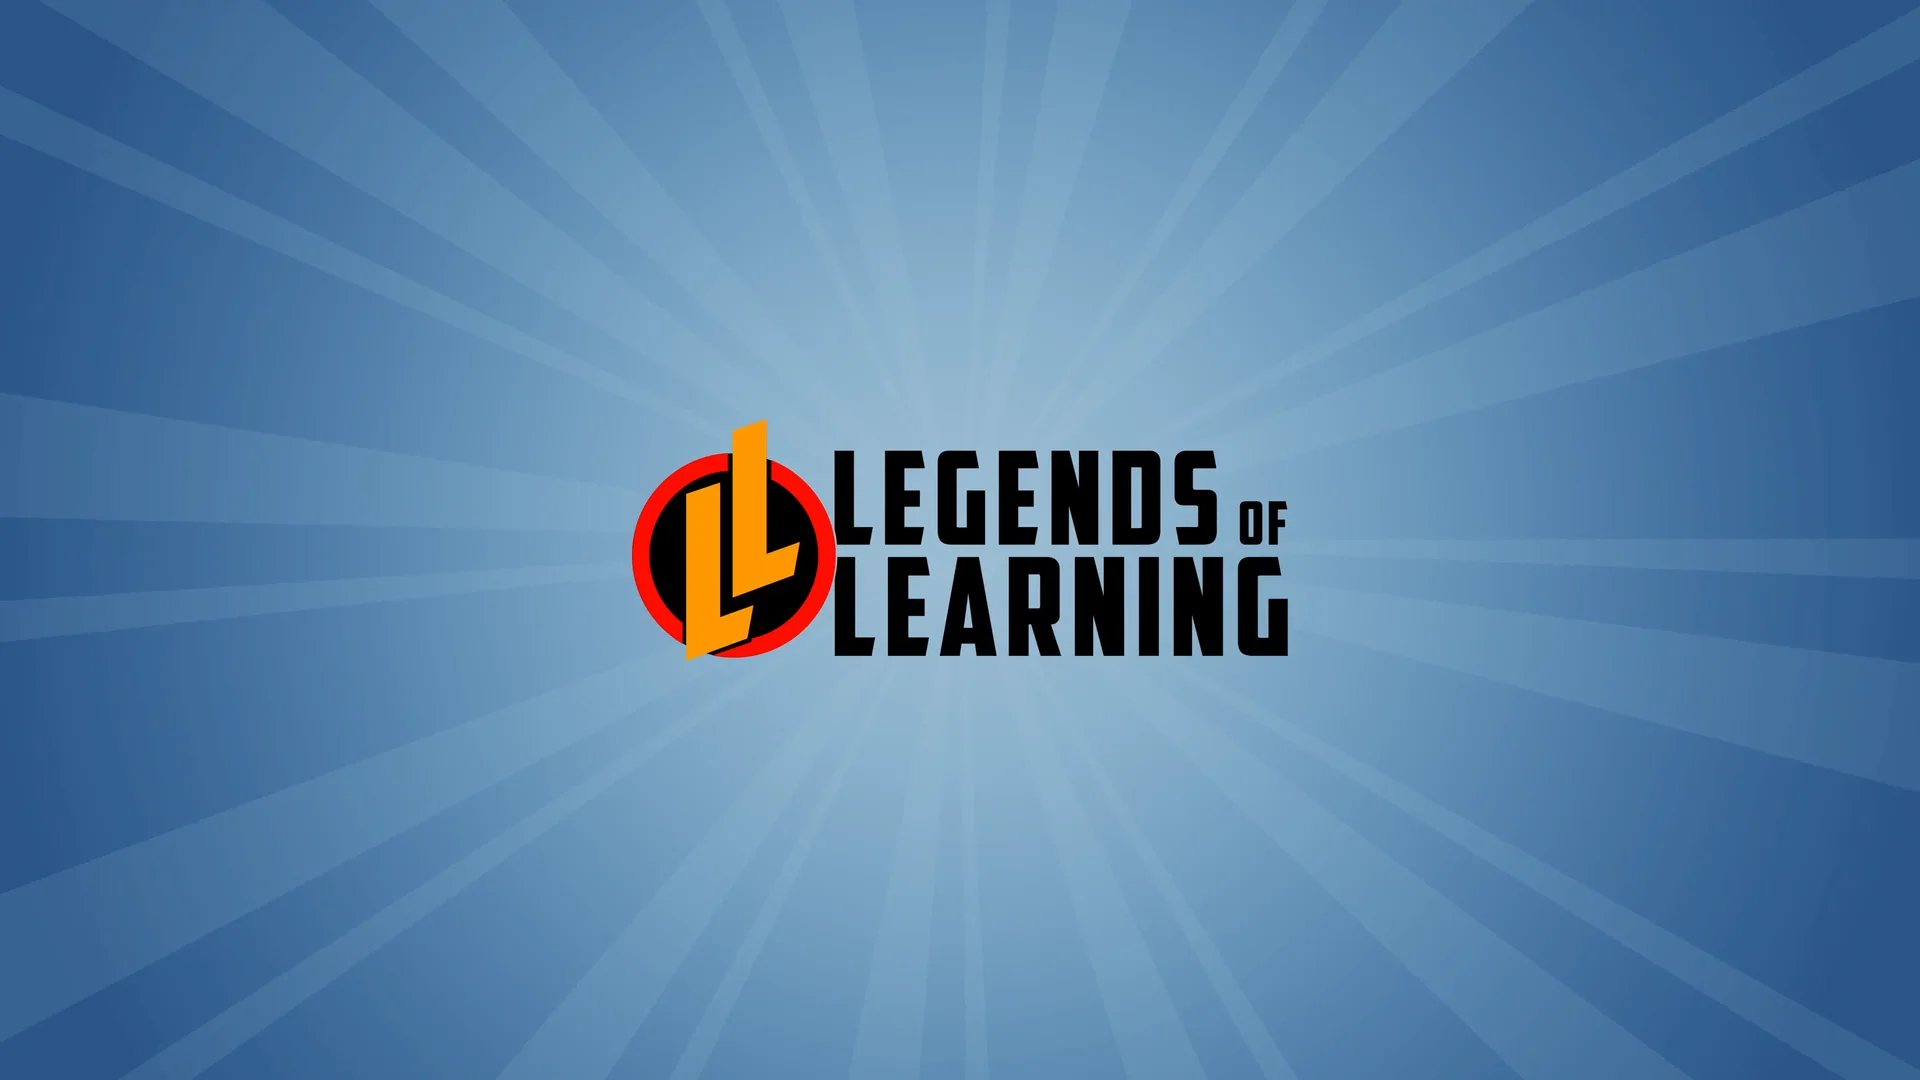 Legends of Learning: Awakening on Vimeo